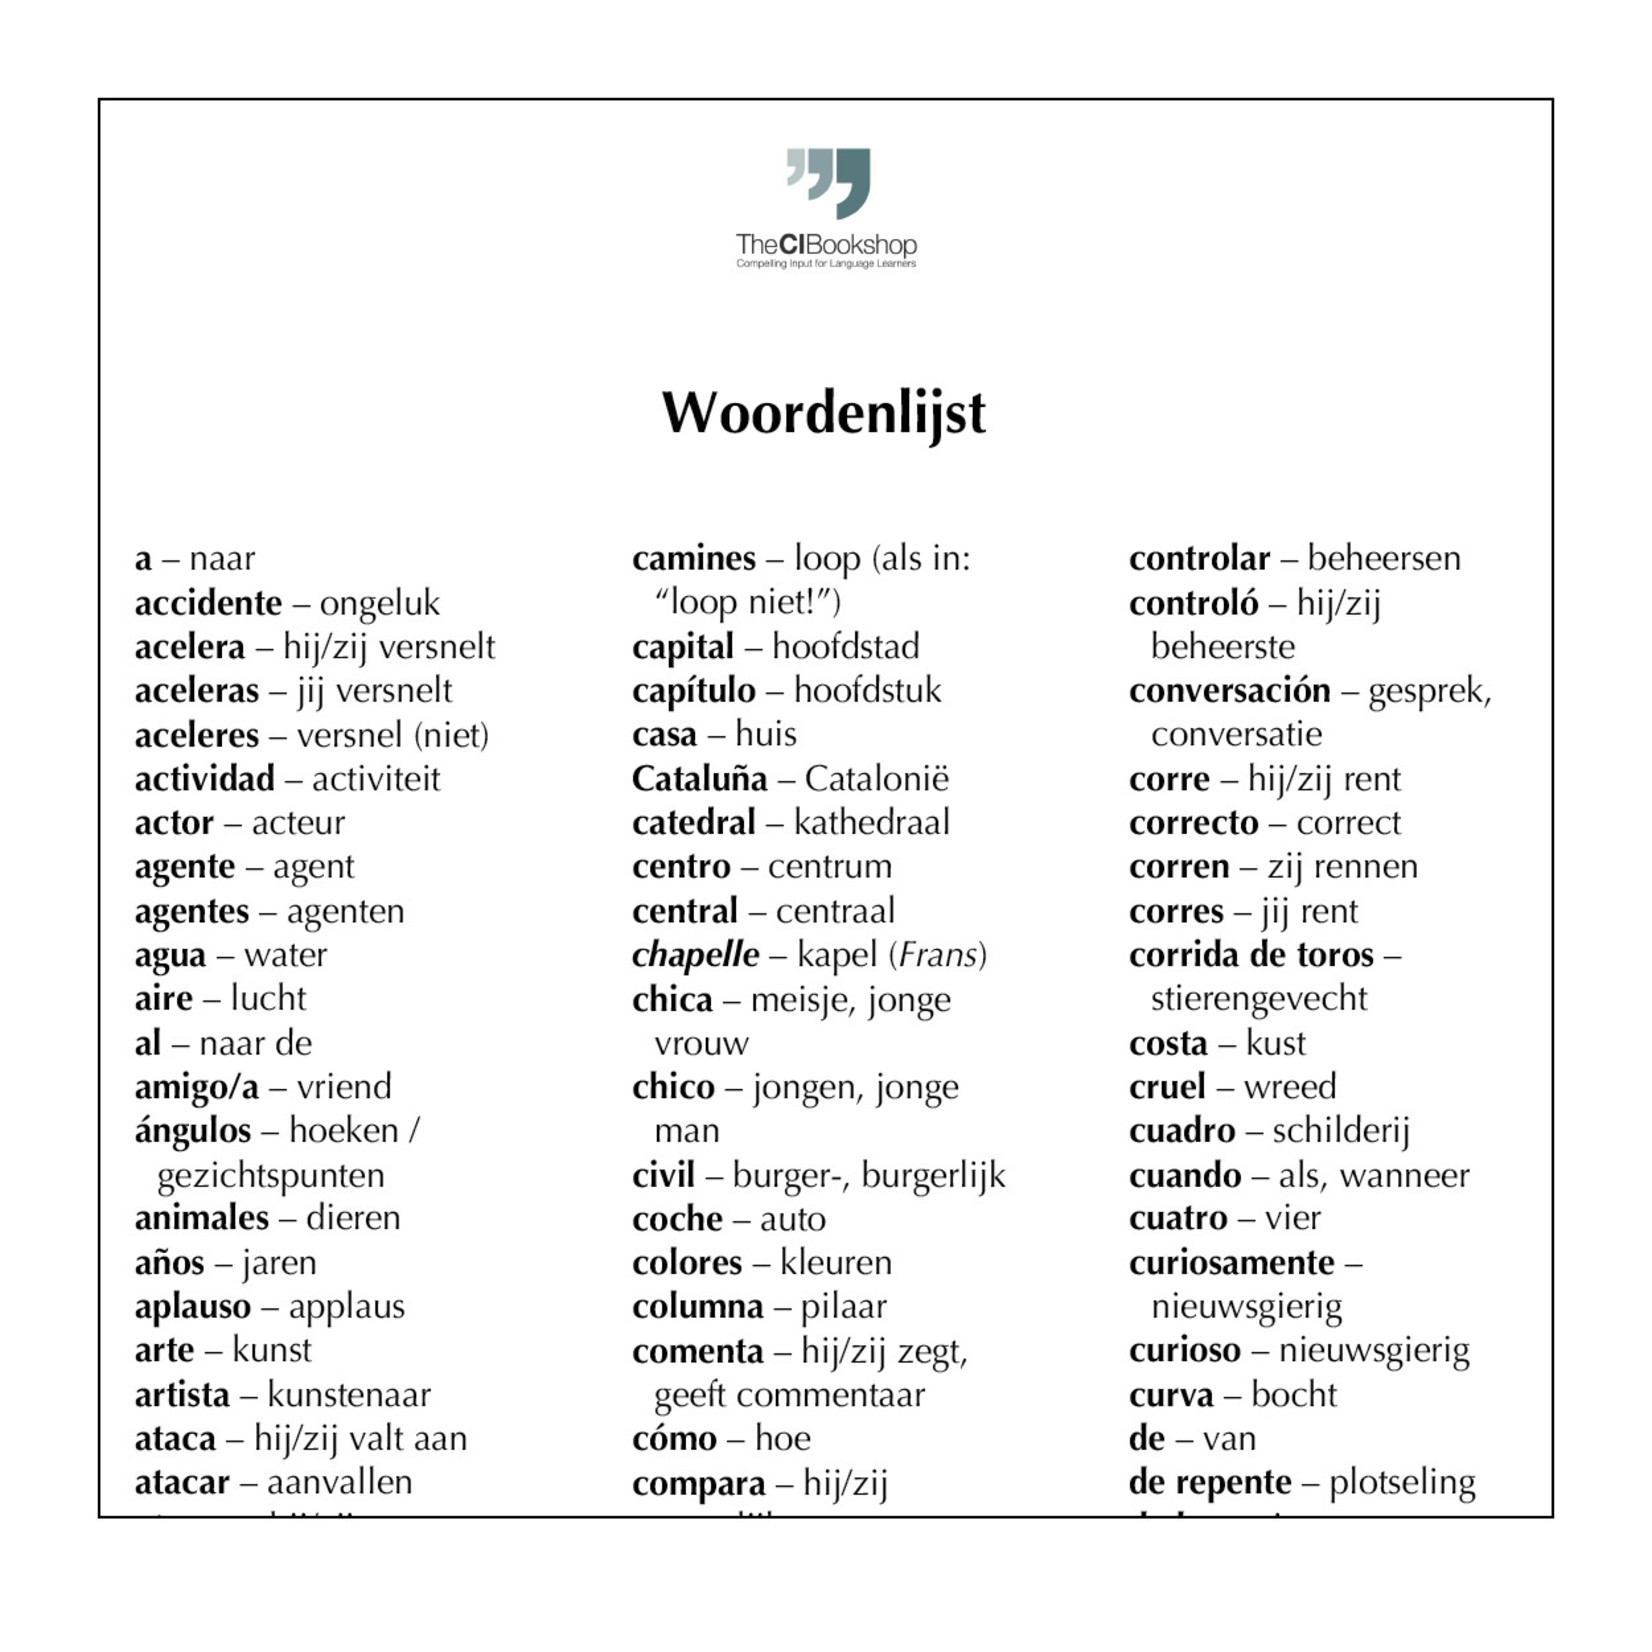 Dutch glossary for La vida es complicada